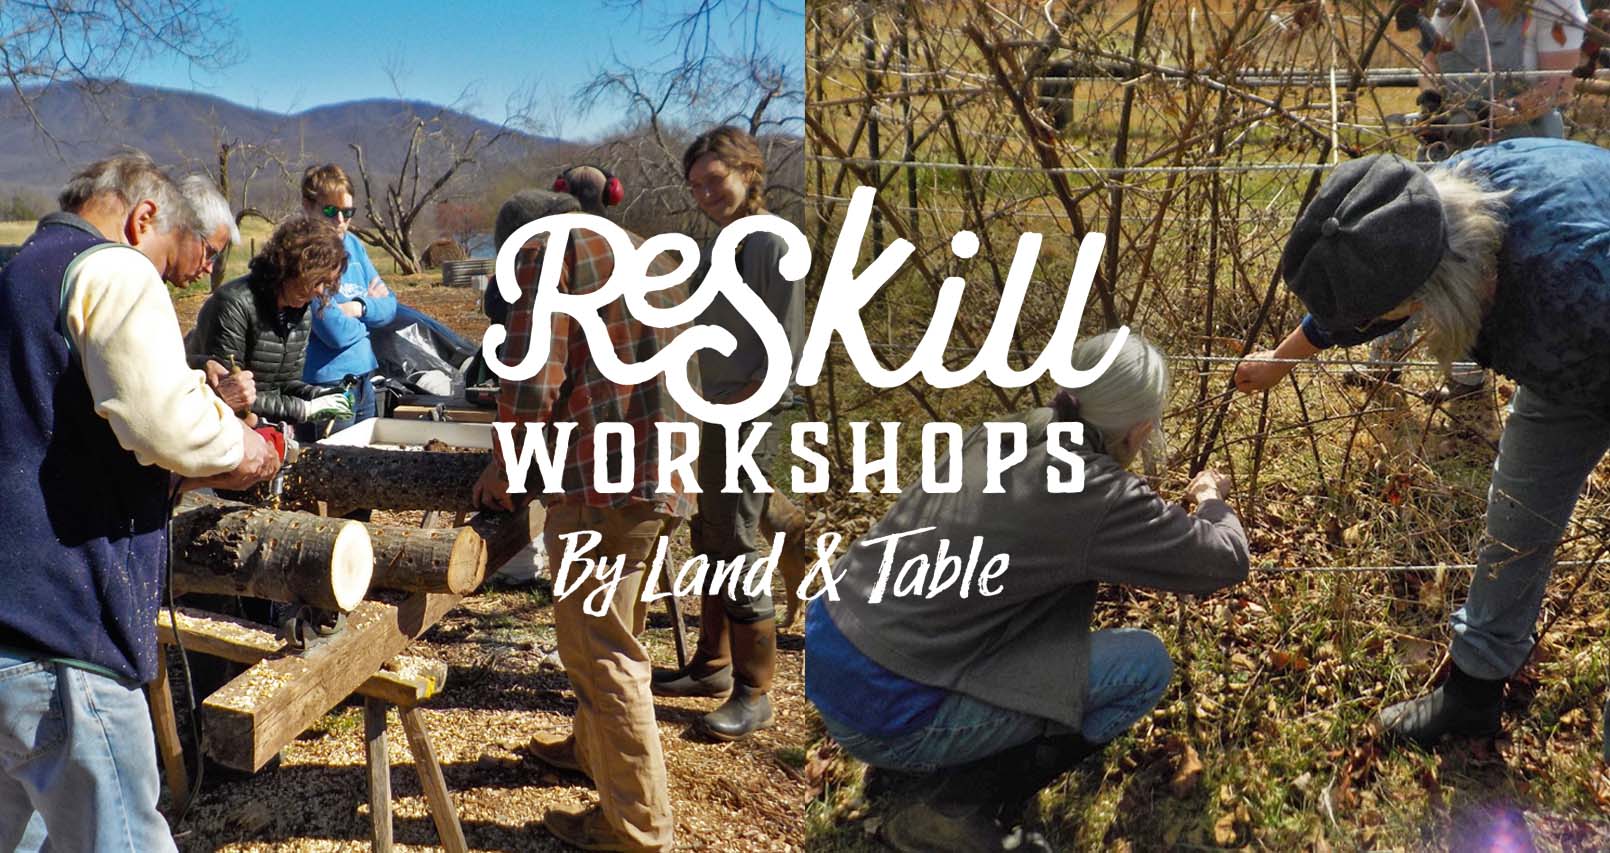 ReSkill workshops